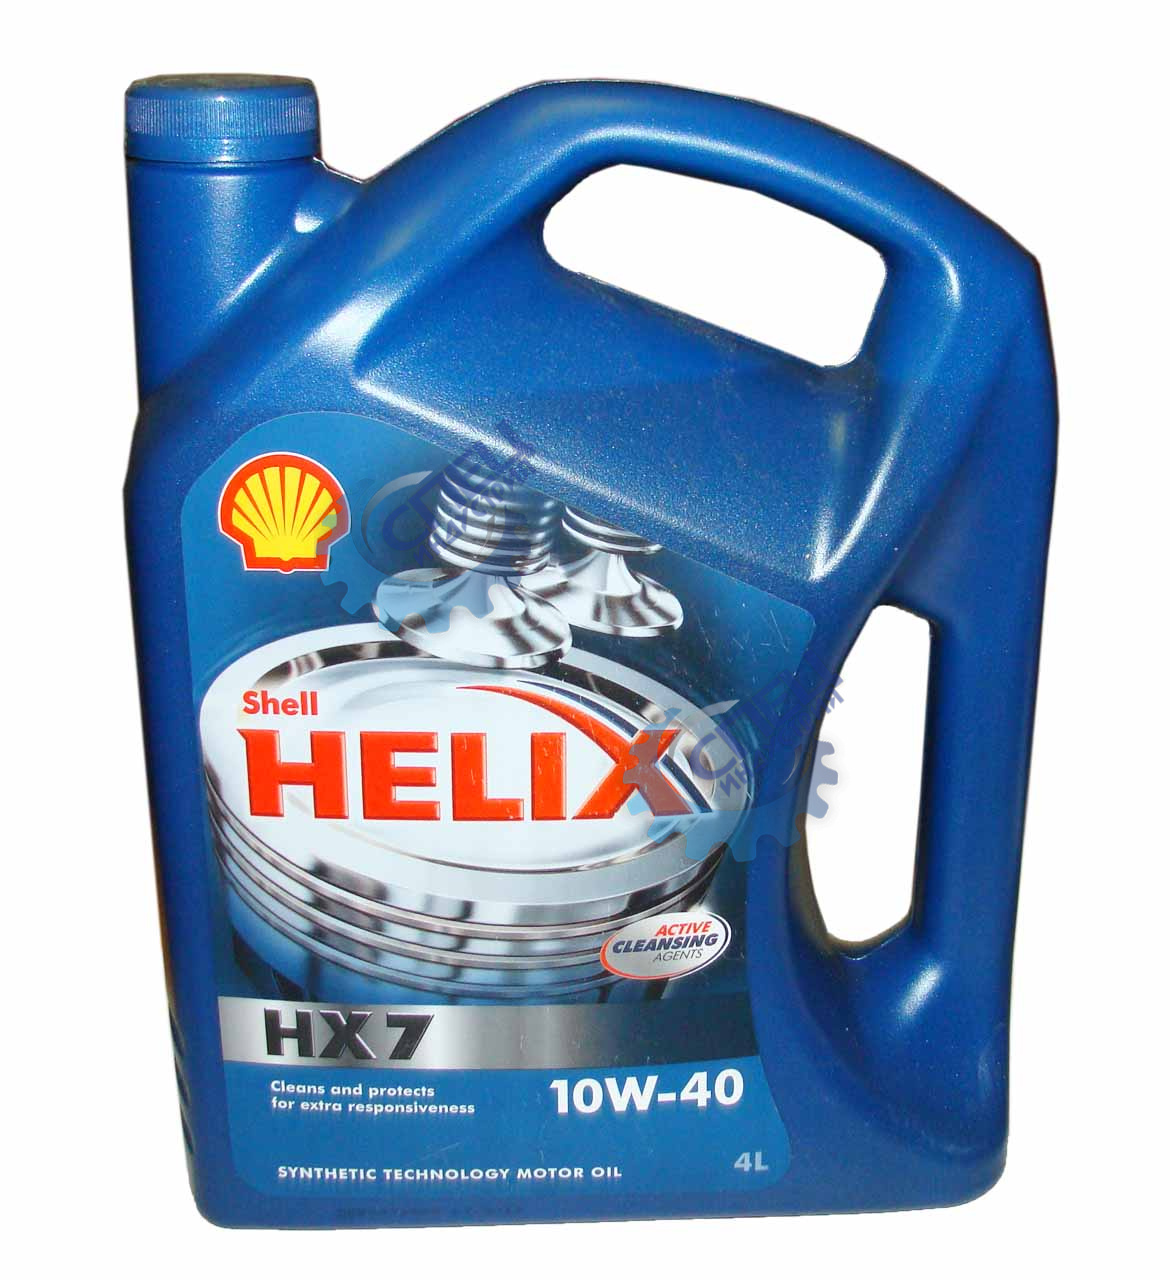 Масло shell 10w40. Shell hx7 Diesel. Shell HX 7 10w 40 Active Cleansing. Shell Helix HX 7 Diesel 10 40. Shell Helix 10w 40 Diesel.